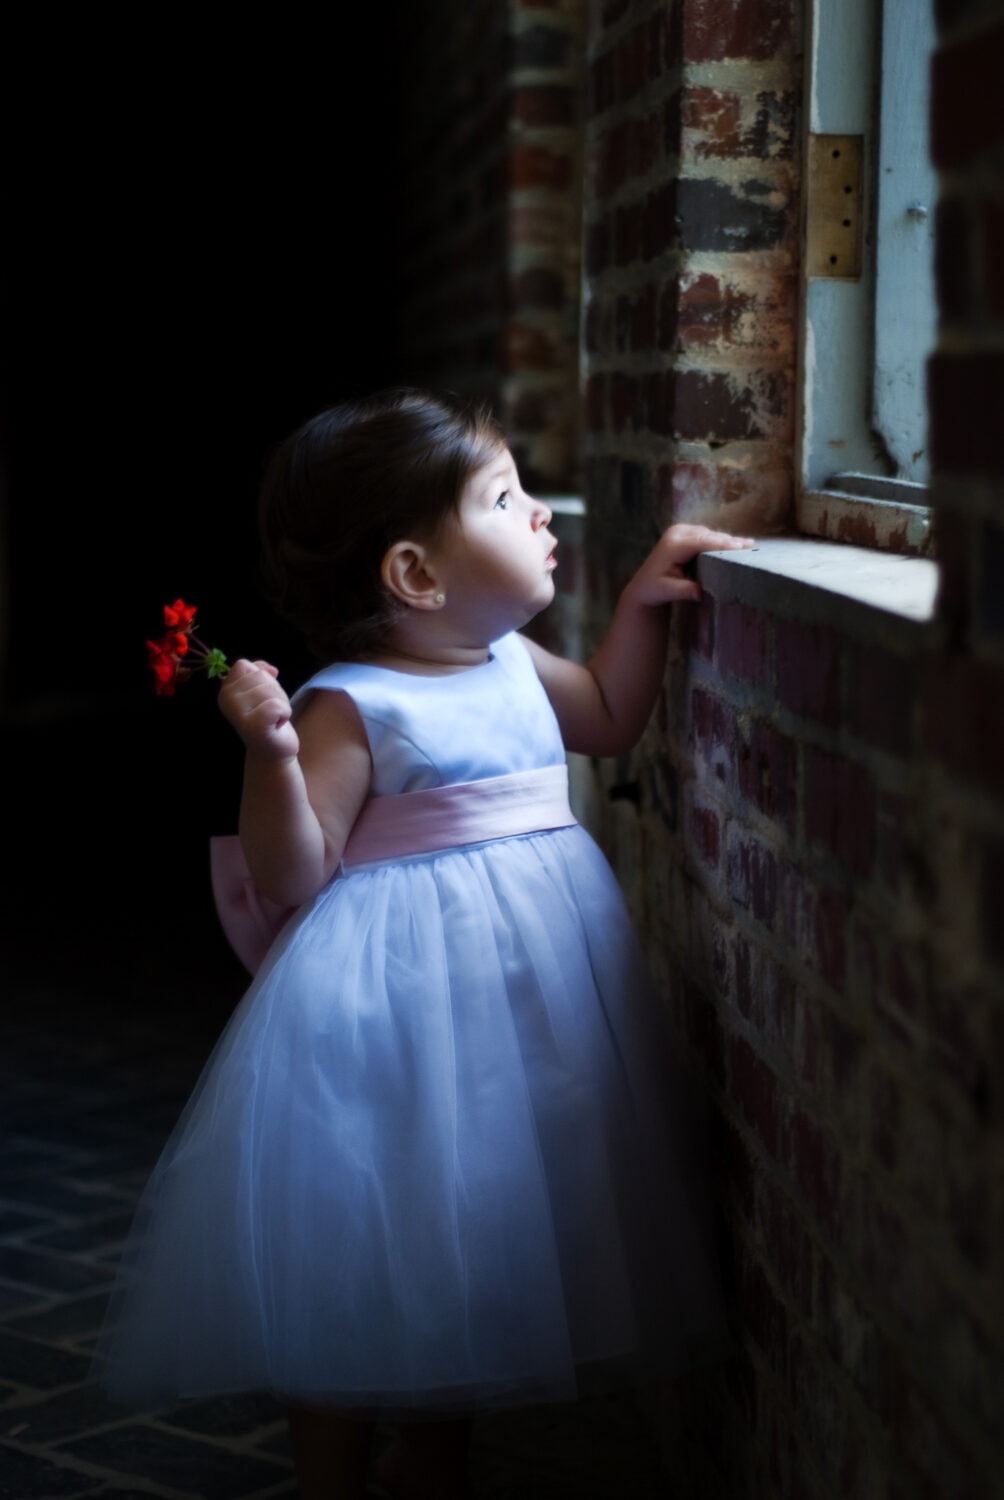 Little girl holding a flower - Atalaya Castle